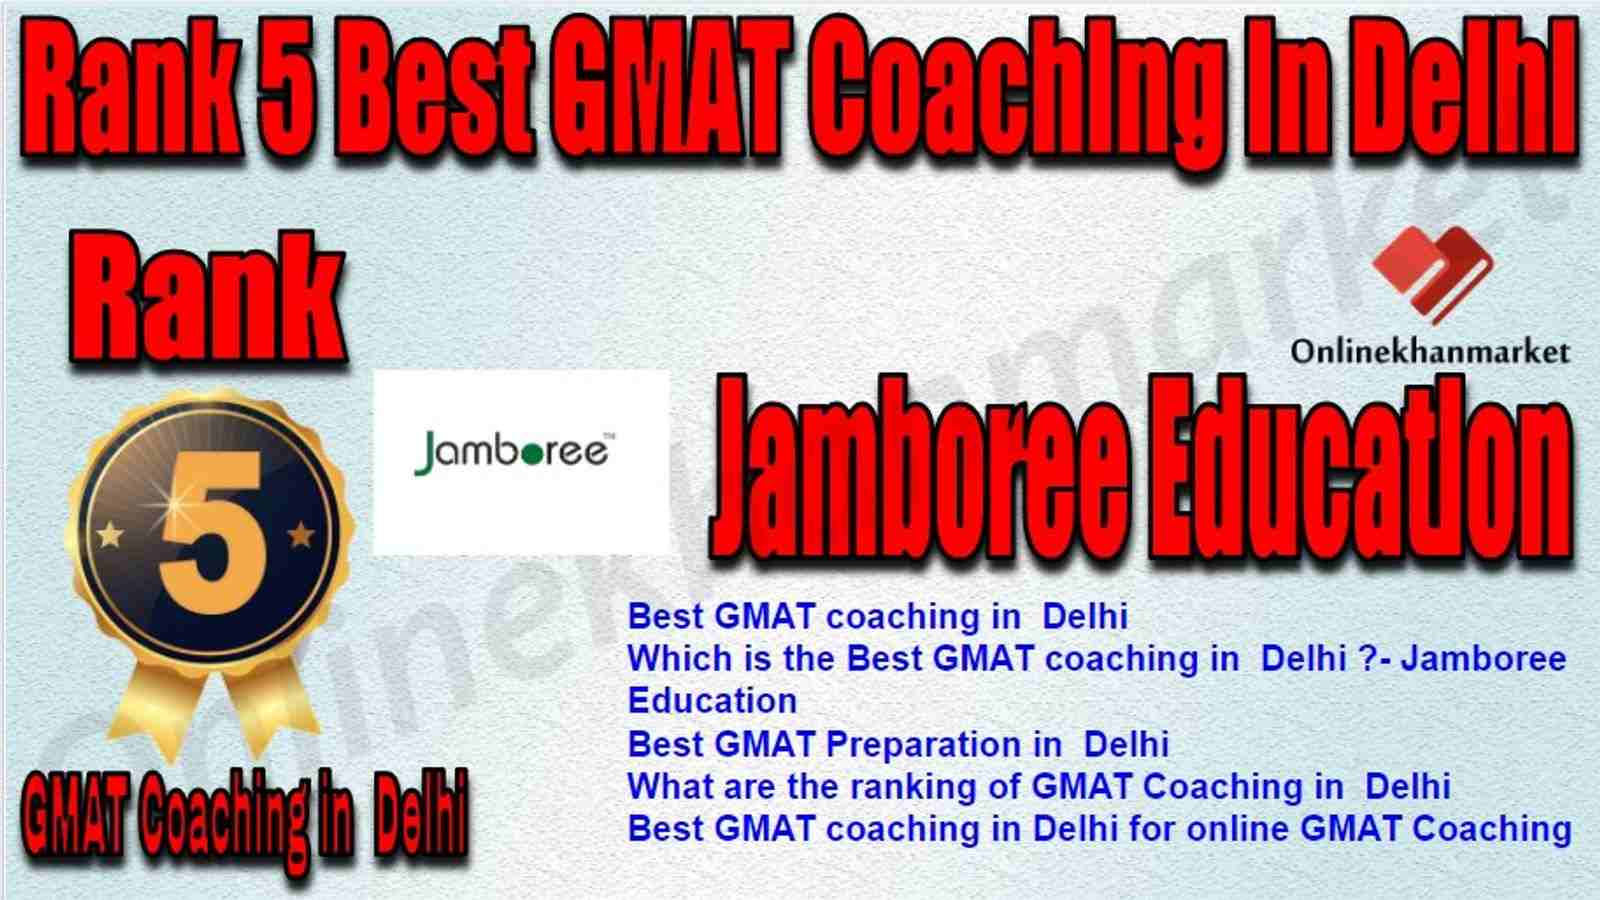 Rank 5 Best GMAT Coaching in Delhi